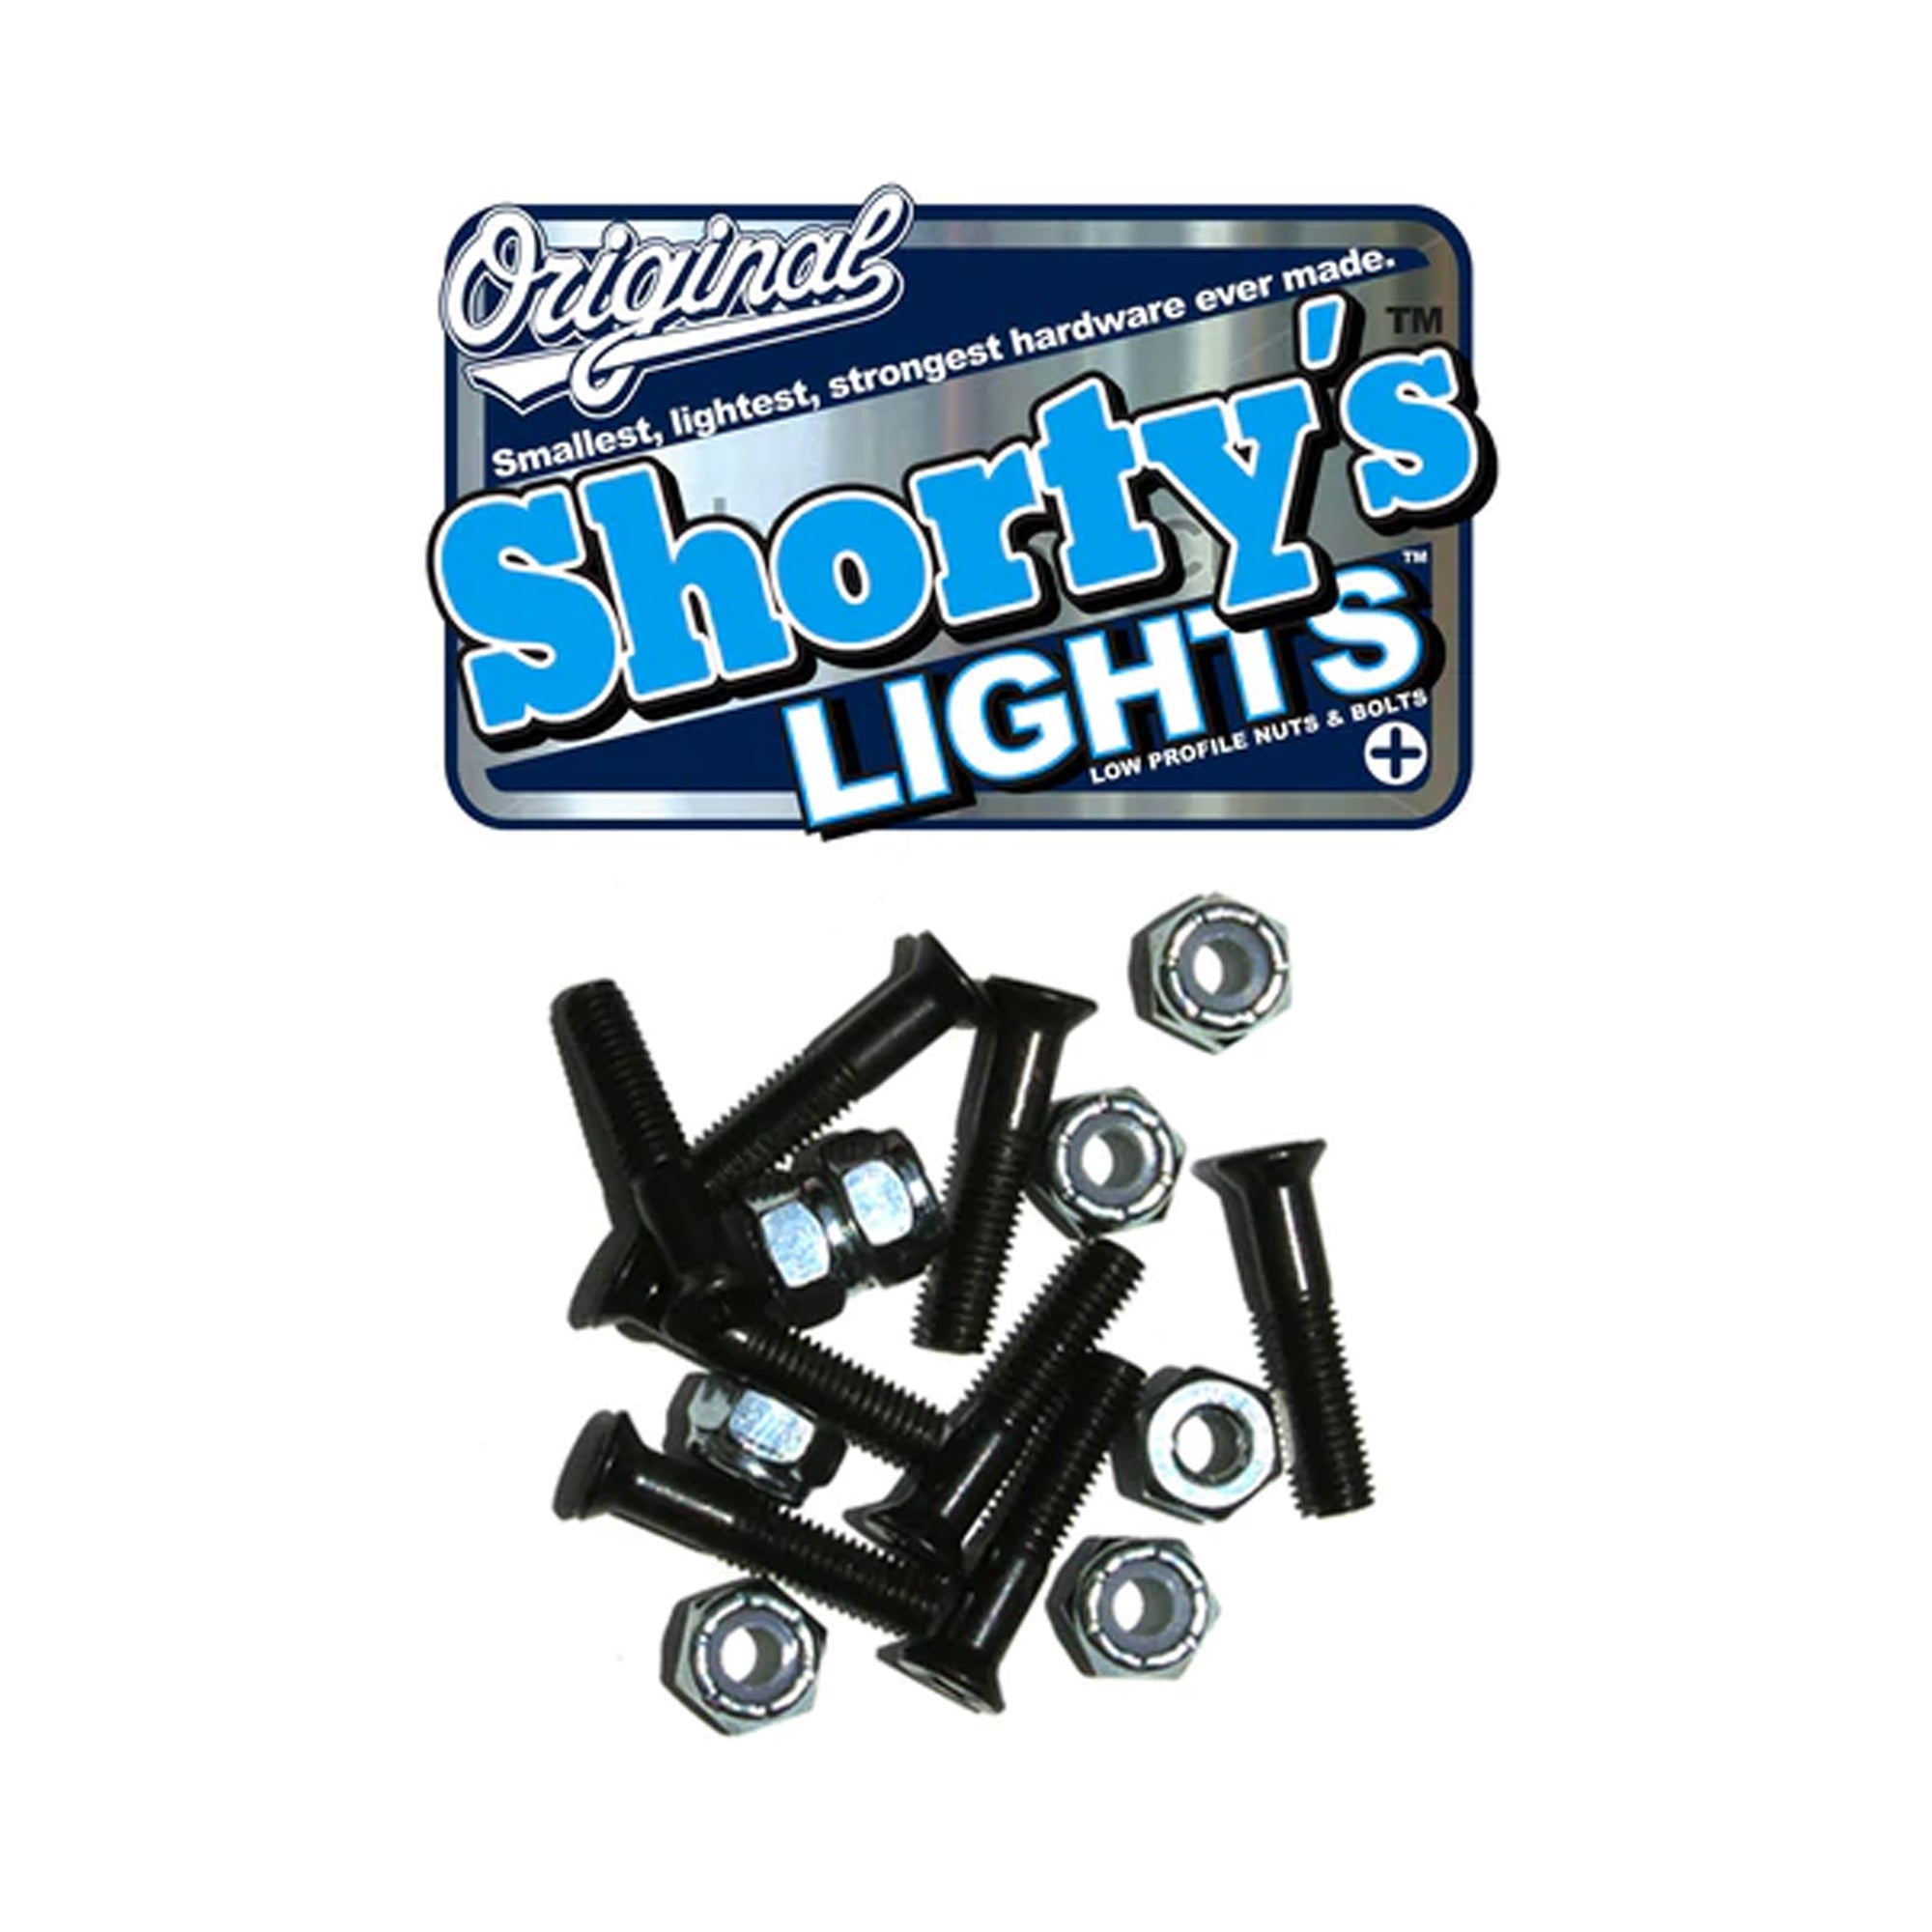 Shorty's Lights 7/8" Skateboard Hardware